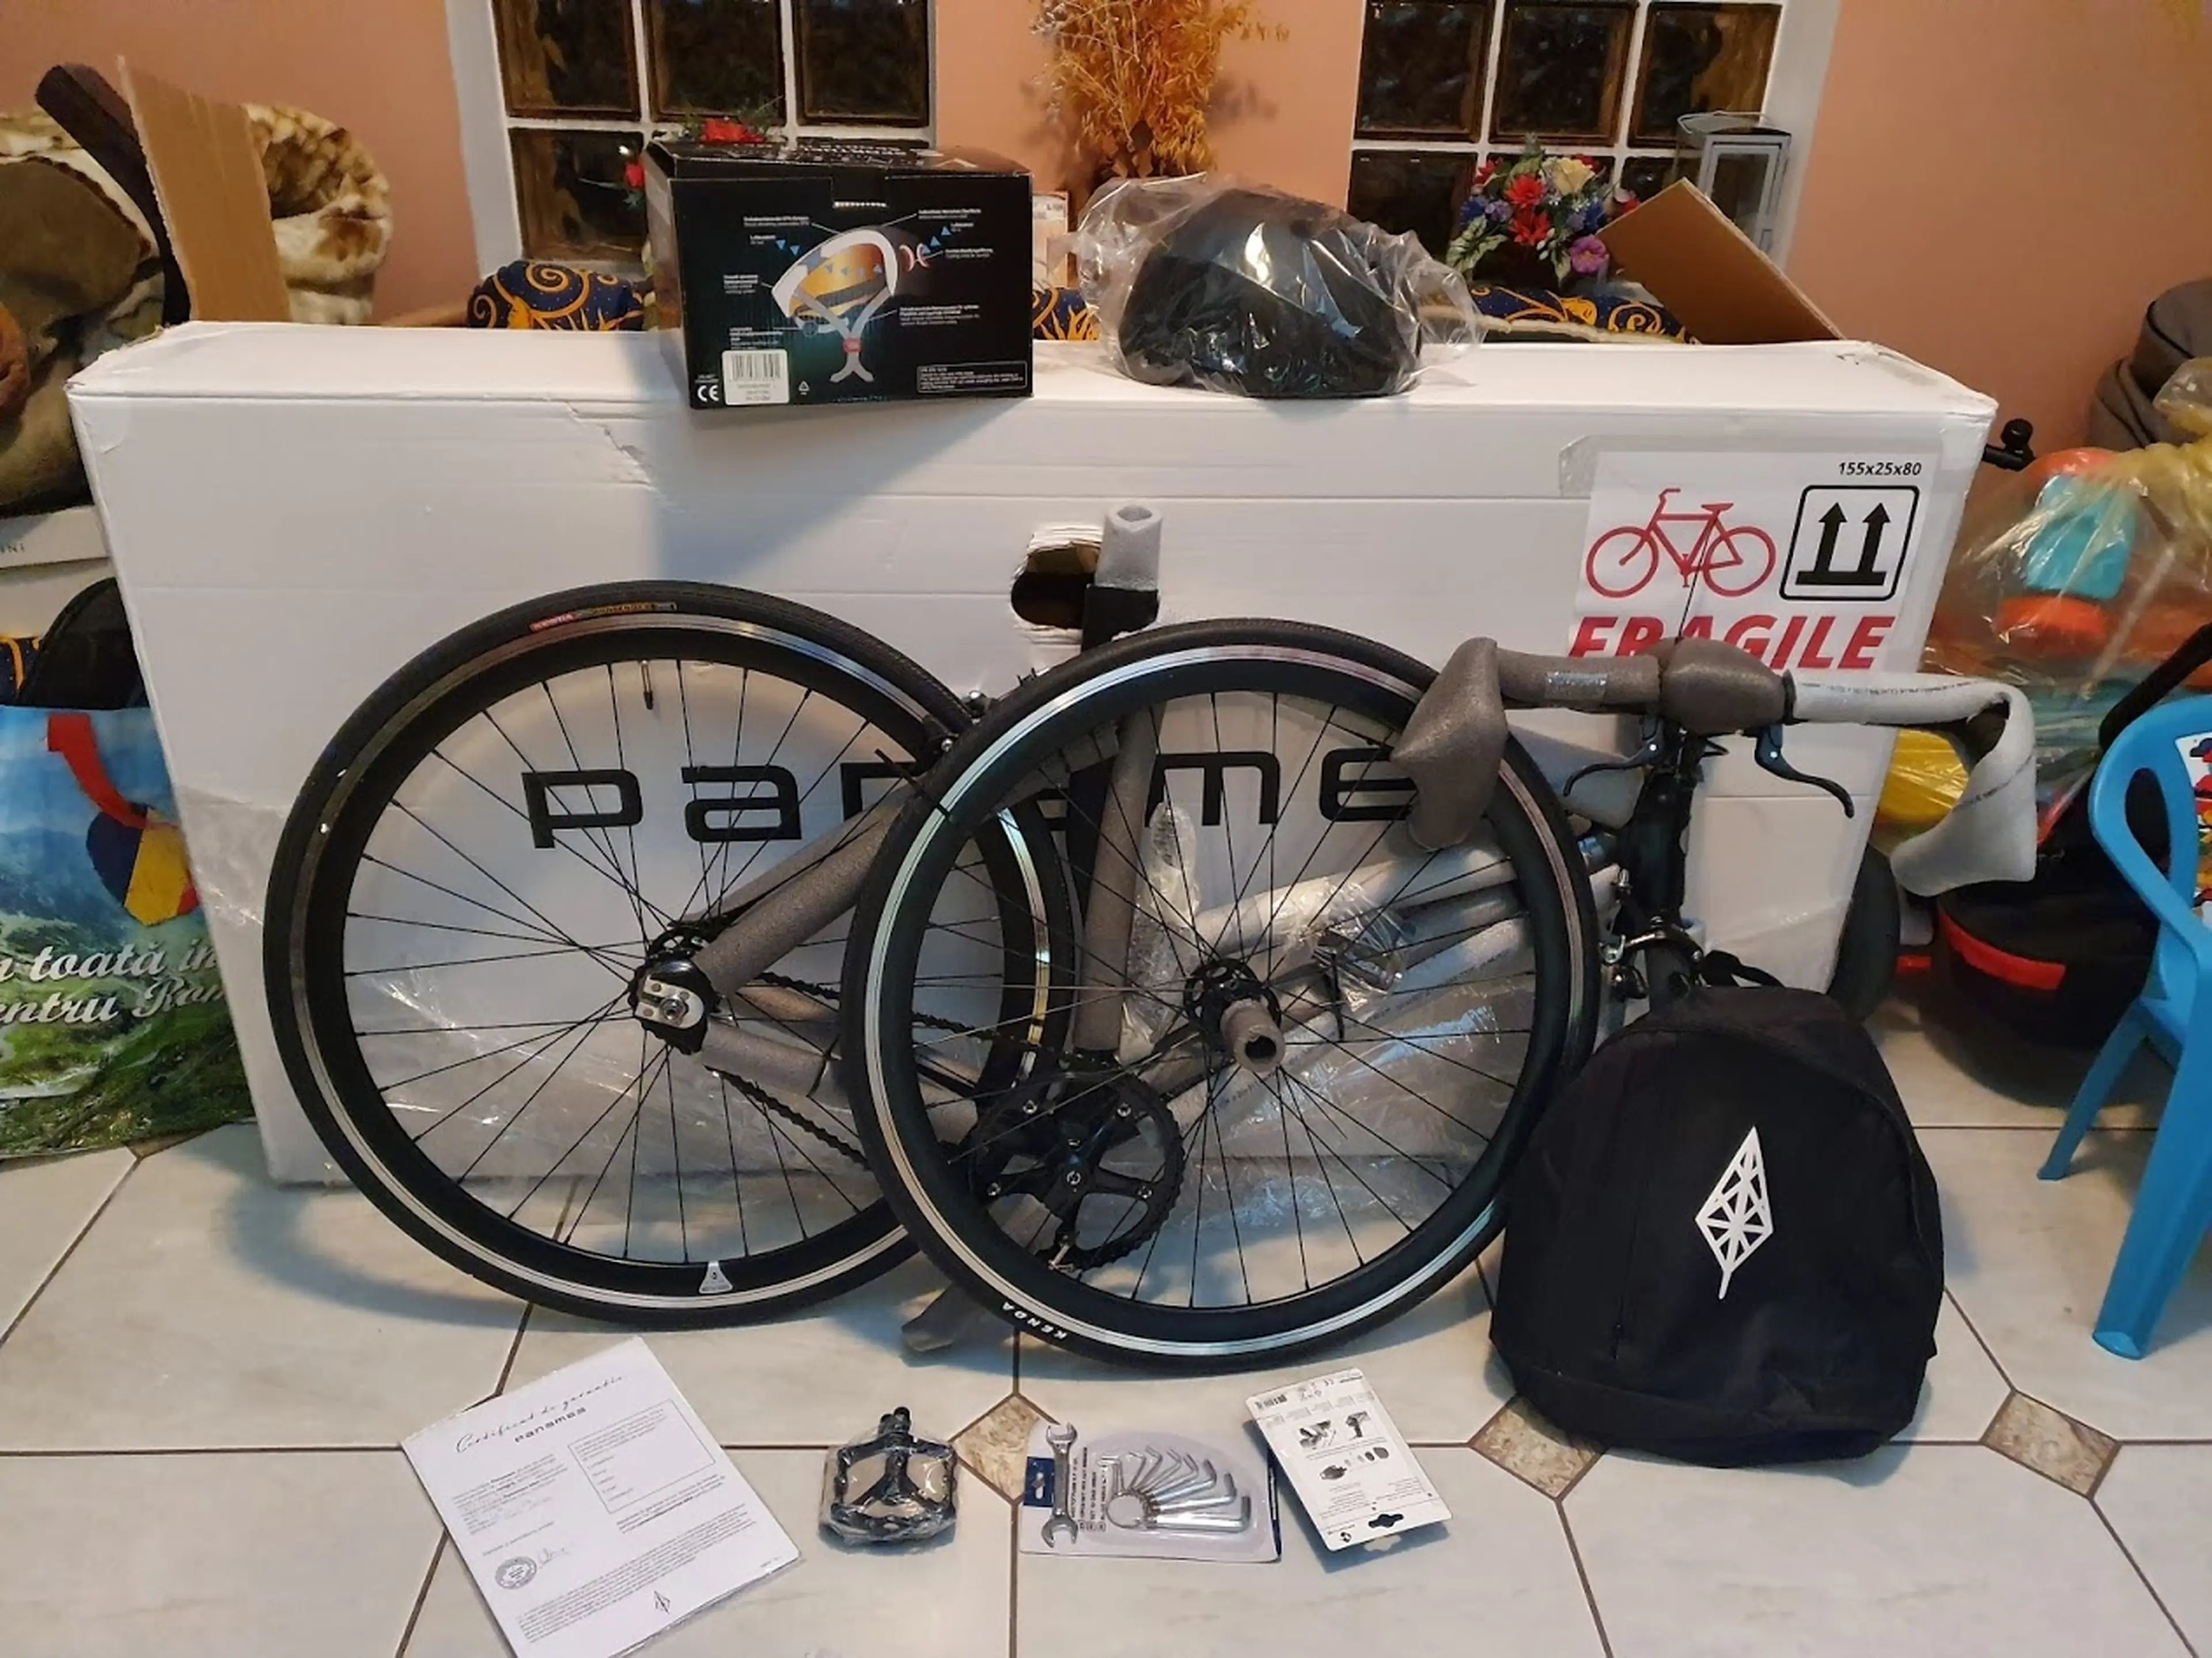 Image Bicicleta Panamea Strada Bold noua, sigilata, cutie garantie 24 luni